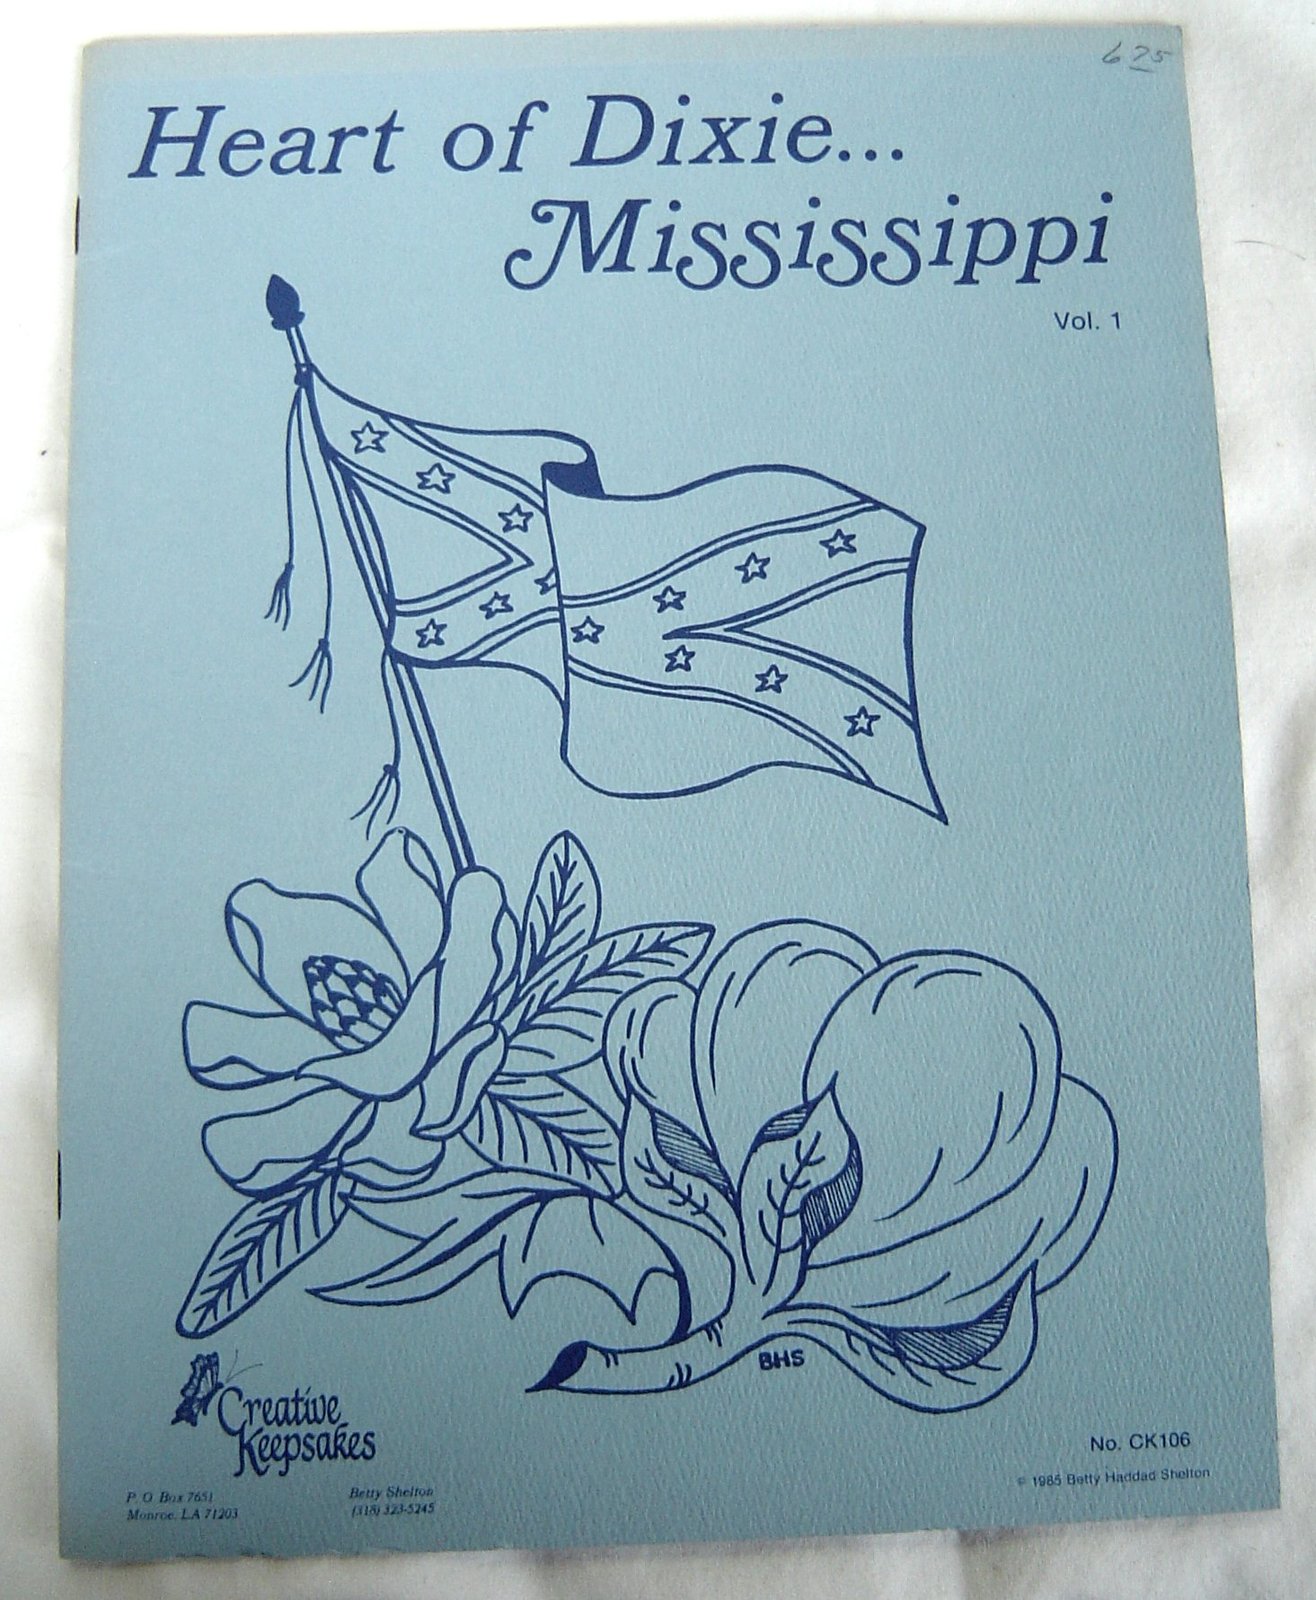  Heart of the Dixie Mississippi Volume 1 Creative Keepsakes 1985 - $14.99